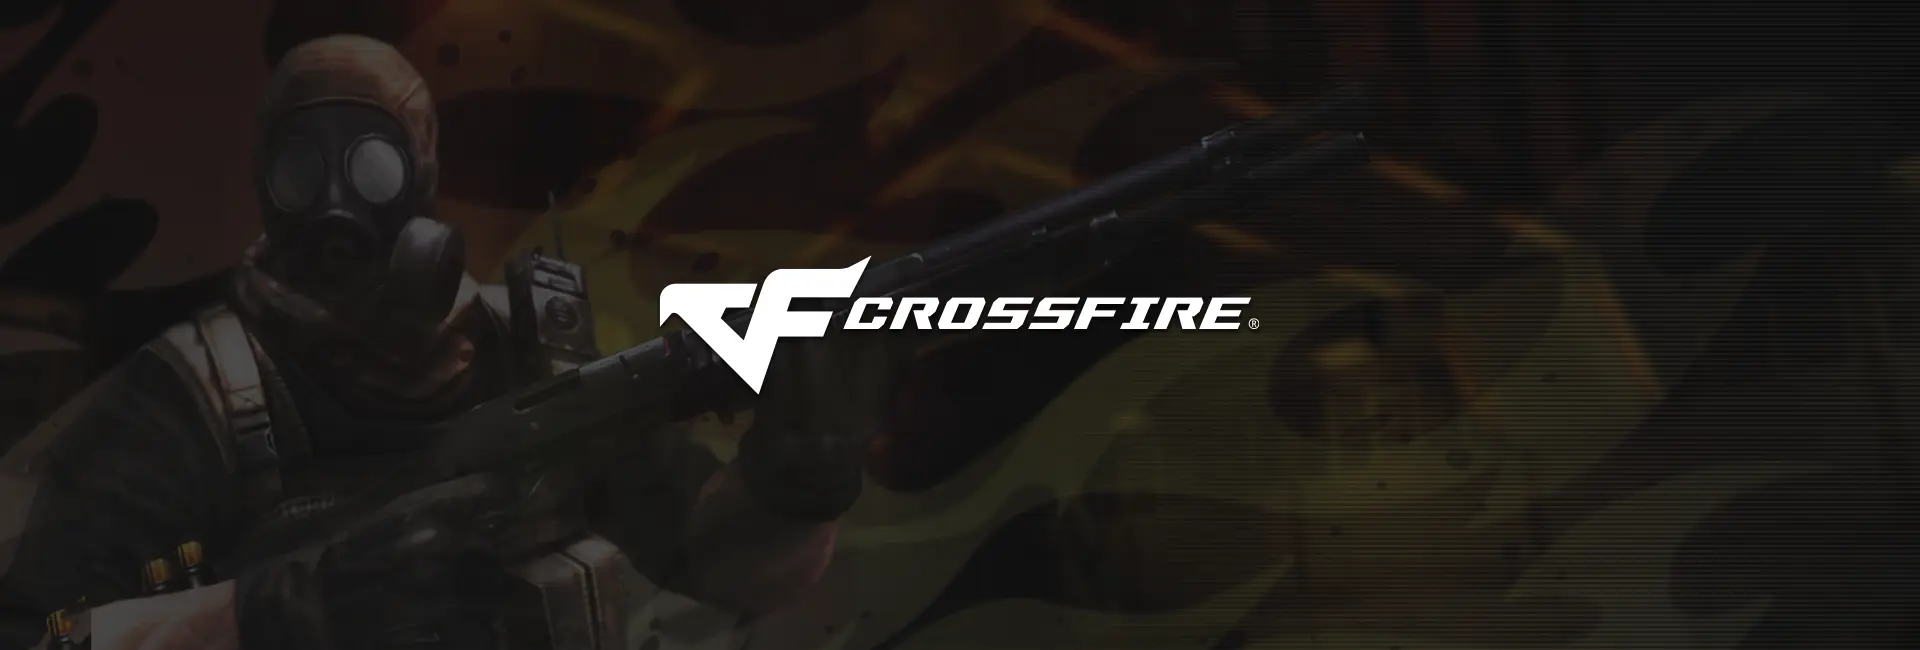 CrossFire Online (Z8games)